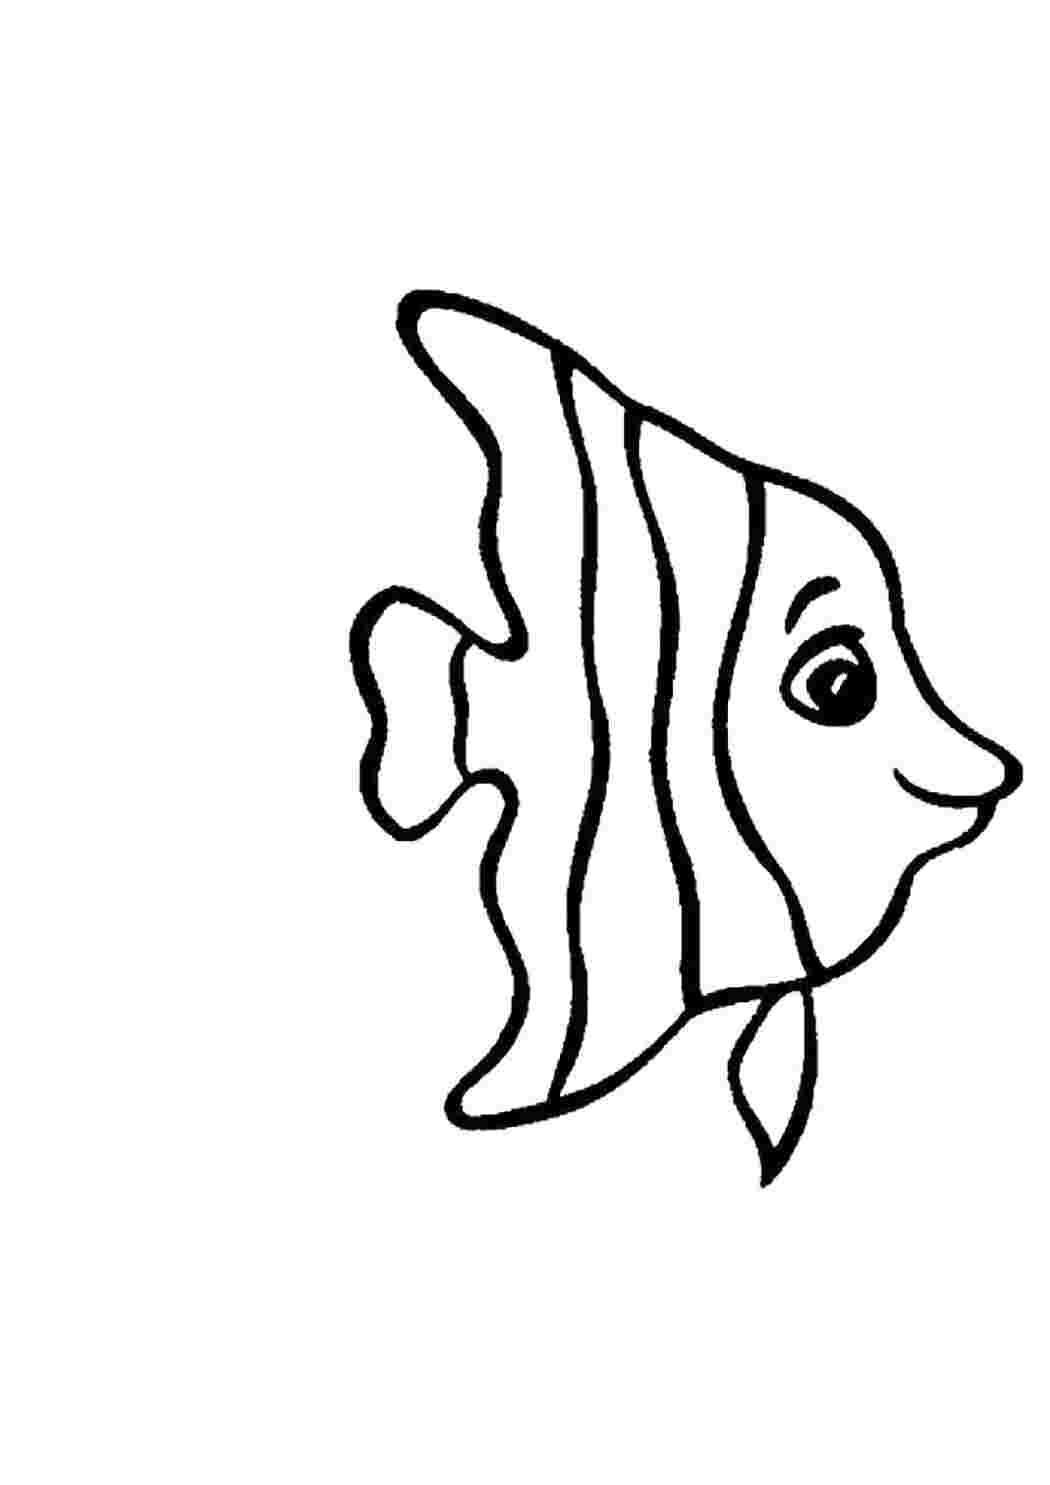 шаблон картинки рыбка